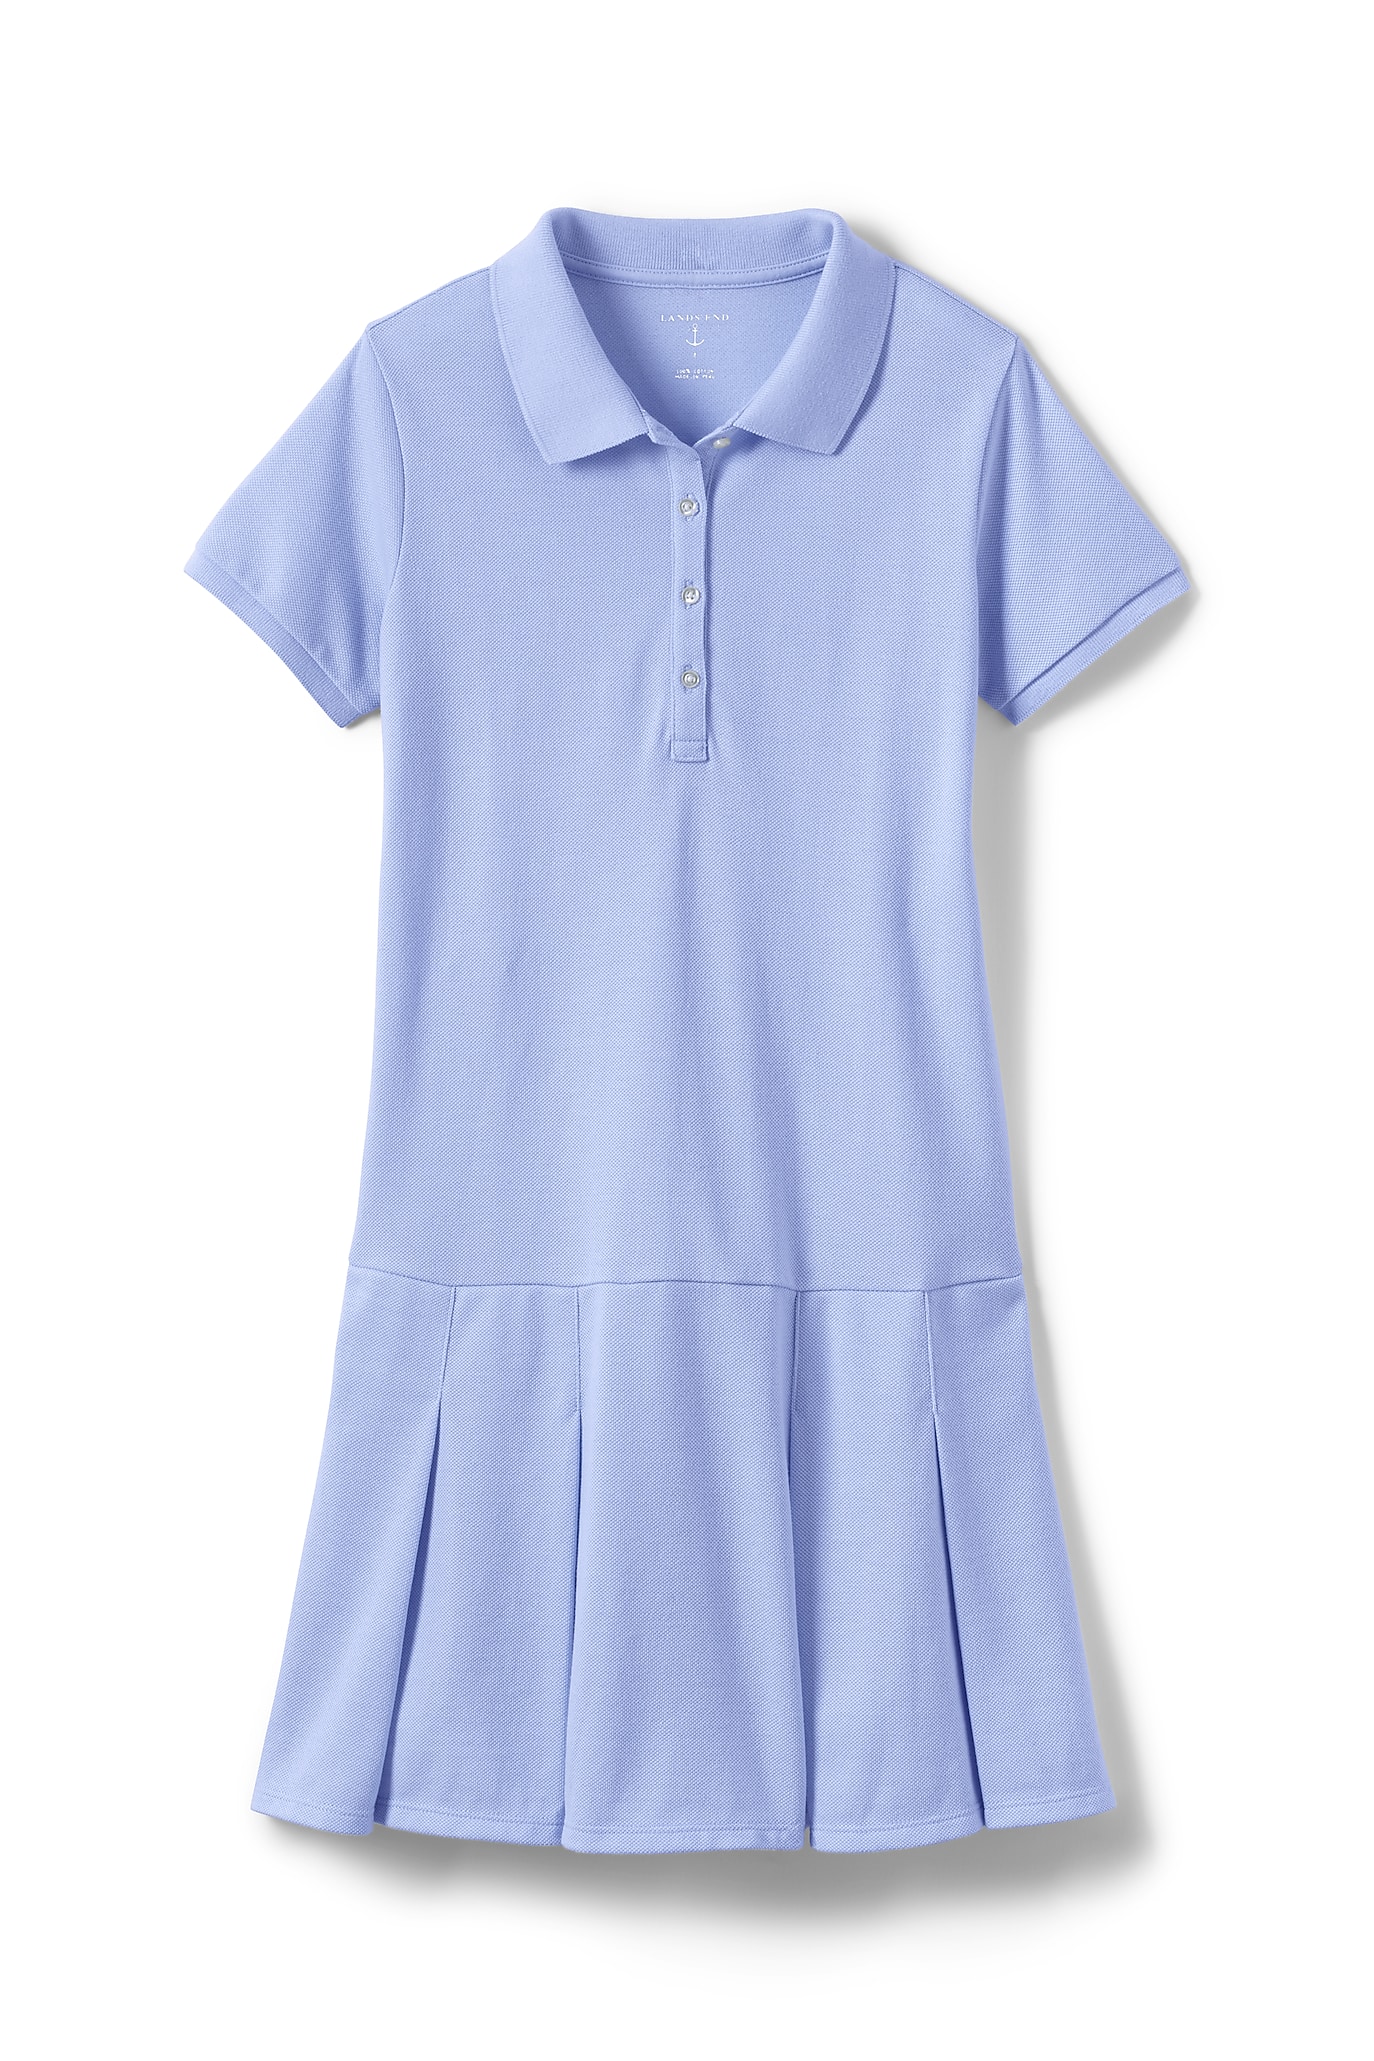 Lands' End Girls School Uniform Short Sleeve Mesh Polo Dress (Little Girls & Big Girls) - image 1 of 2